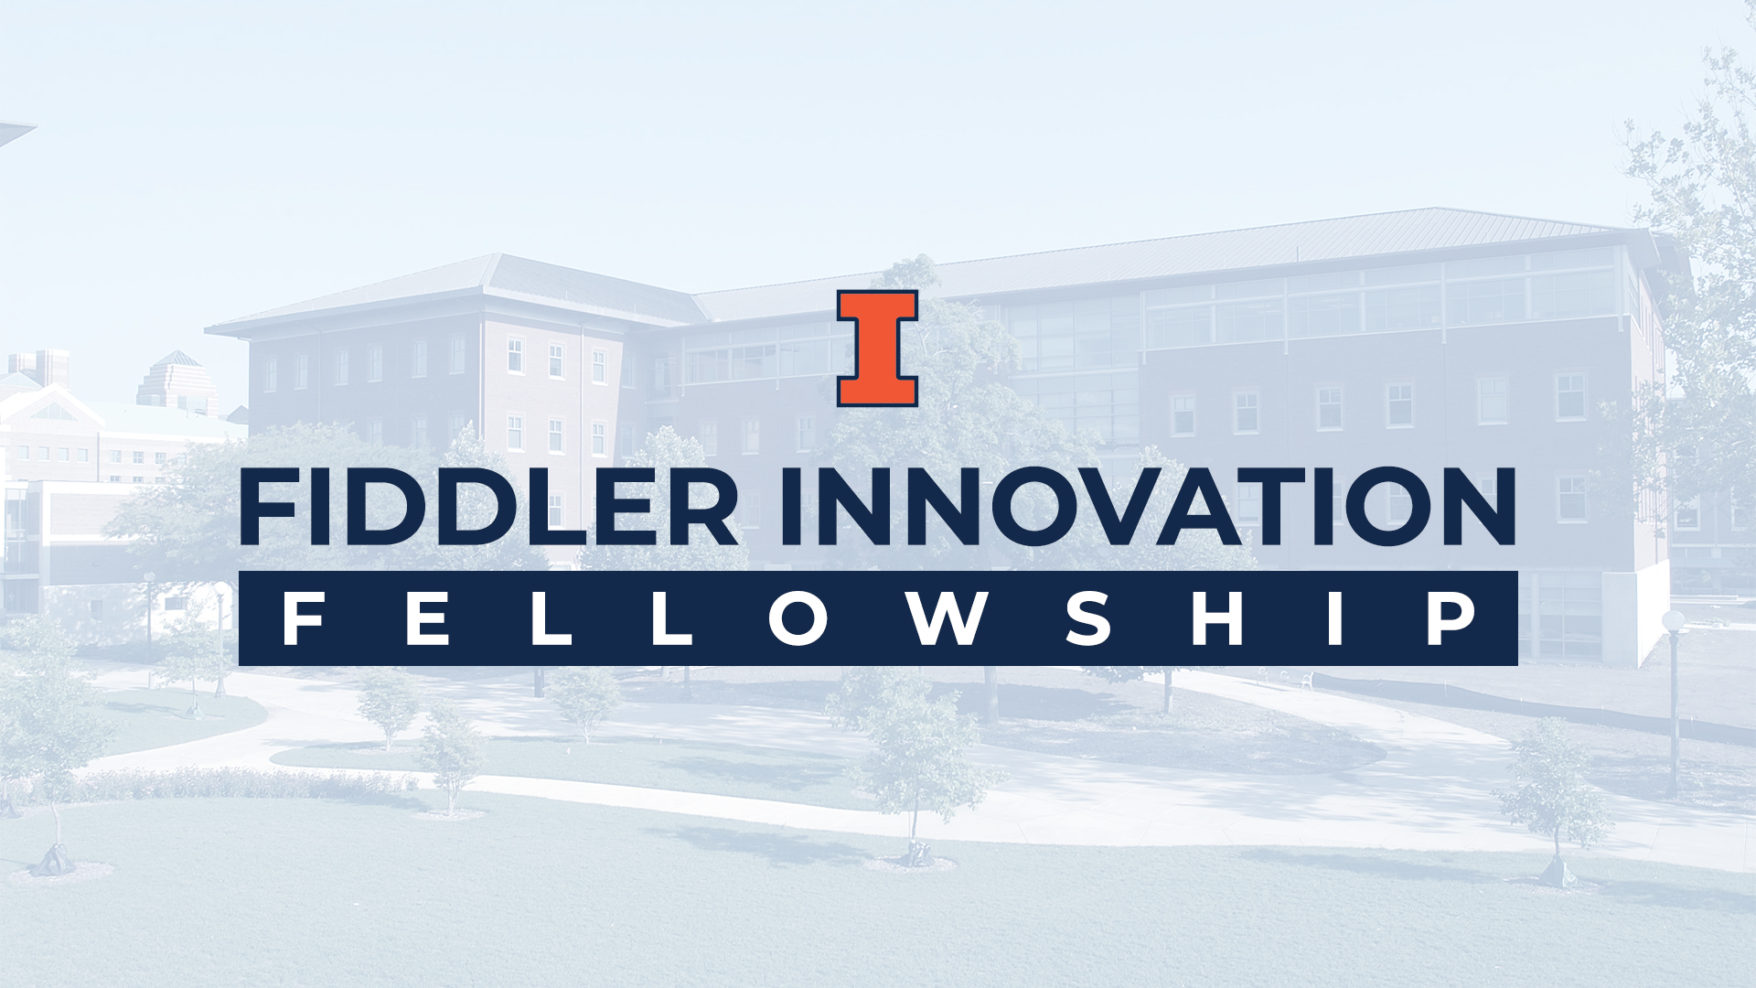 Fiddler Innovation Fellowship